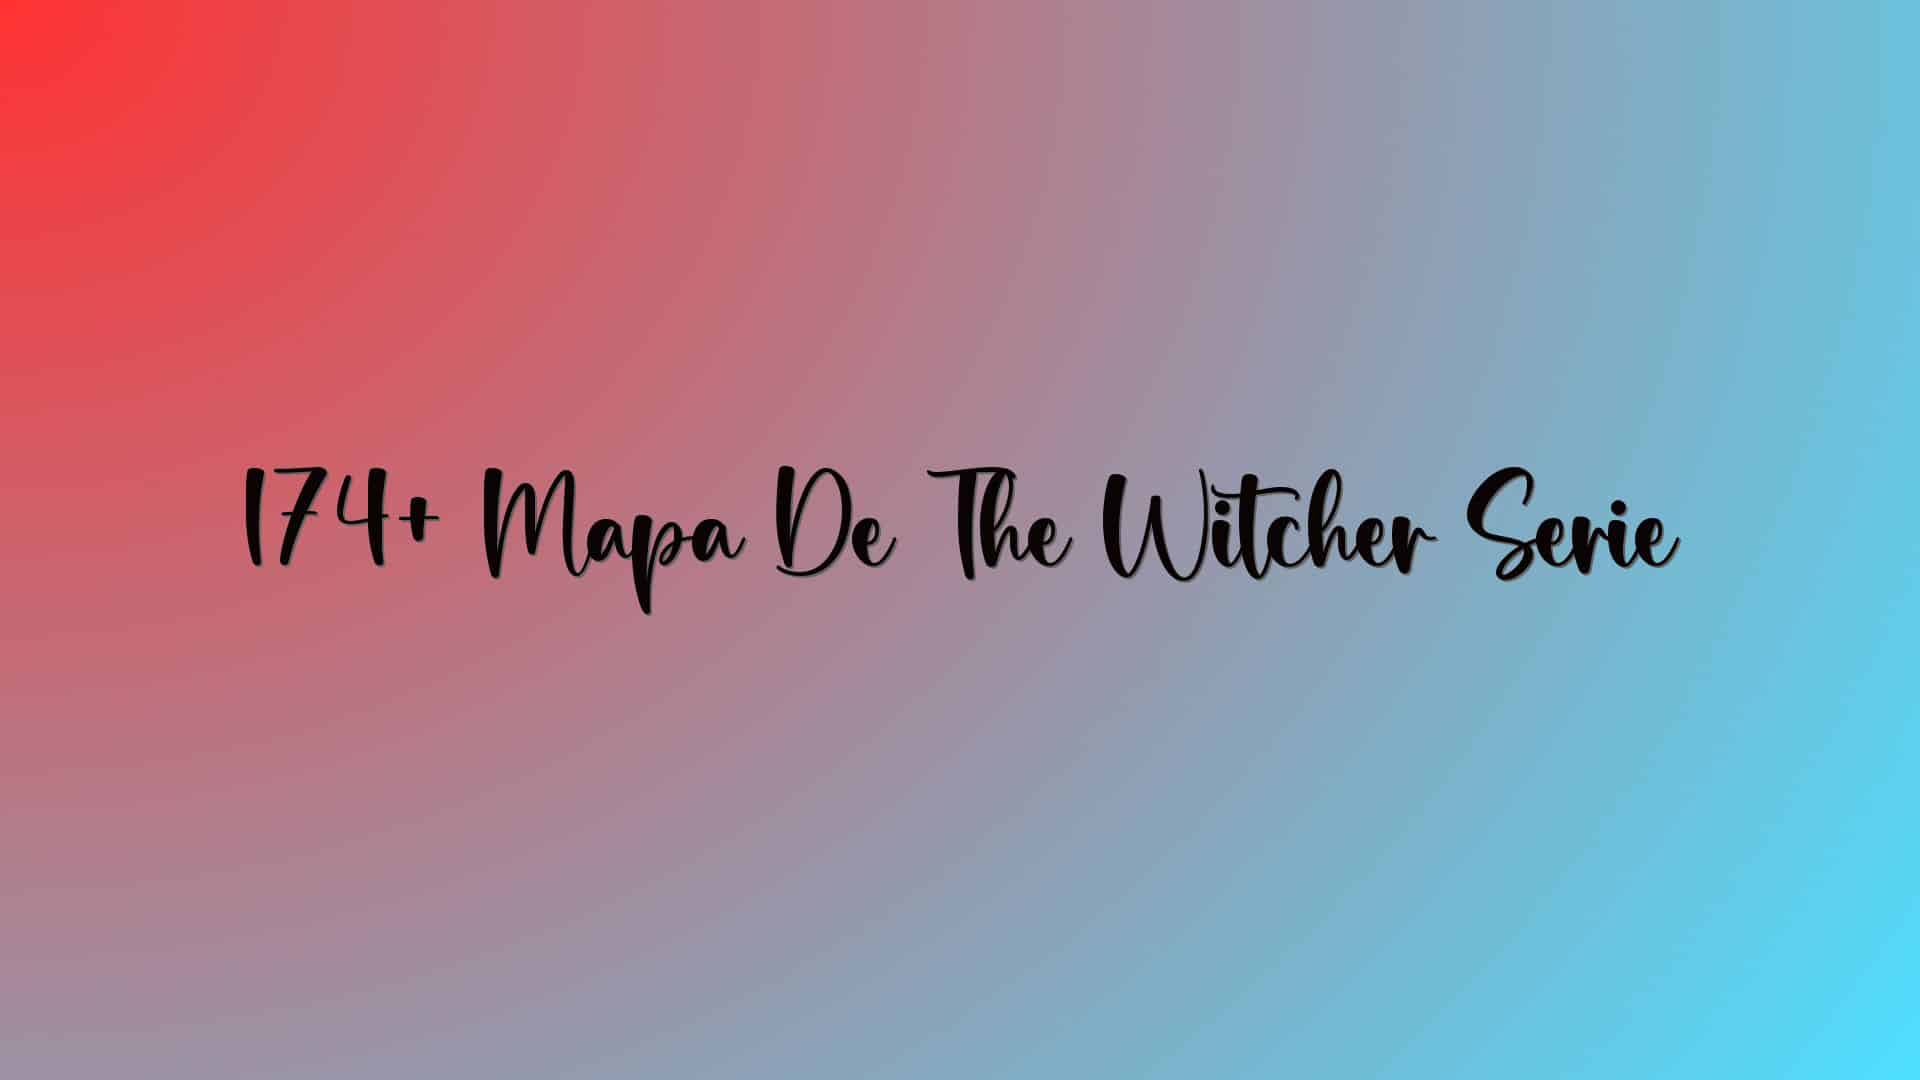 174+ Mapa De The Witcher Serie